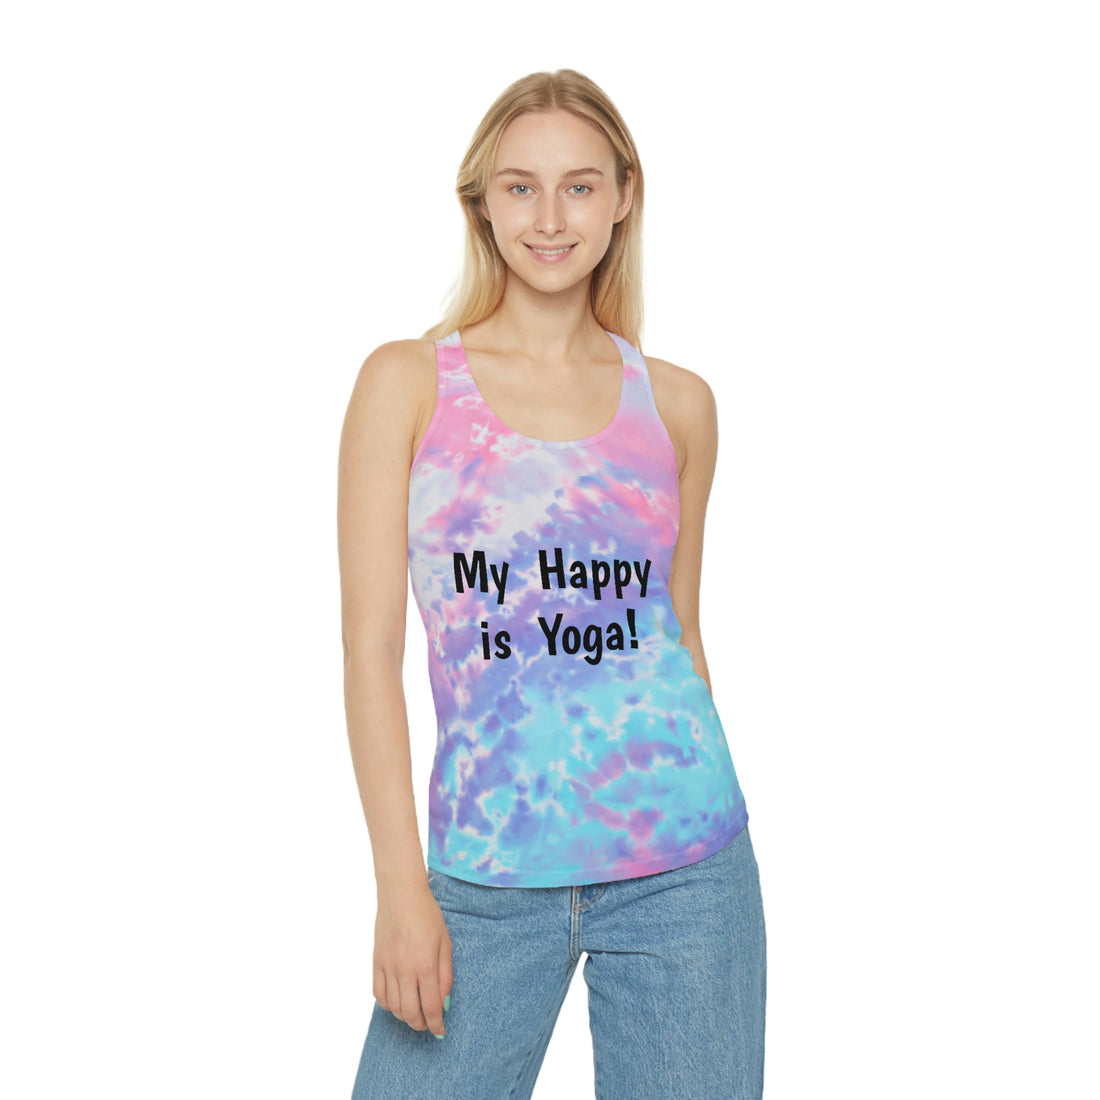 What's Your Happy?! "My Happy is Yoga! Tie Dye Racerback Tank Top